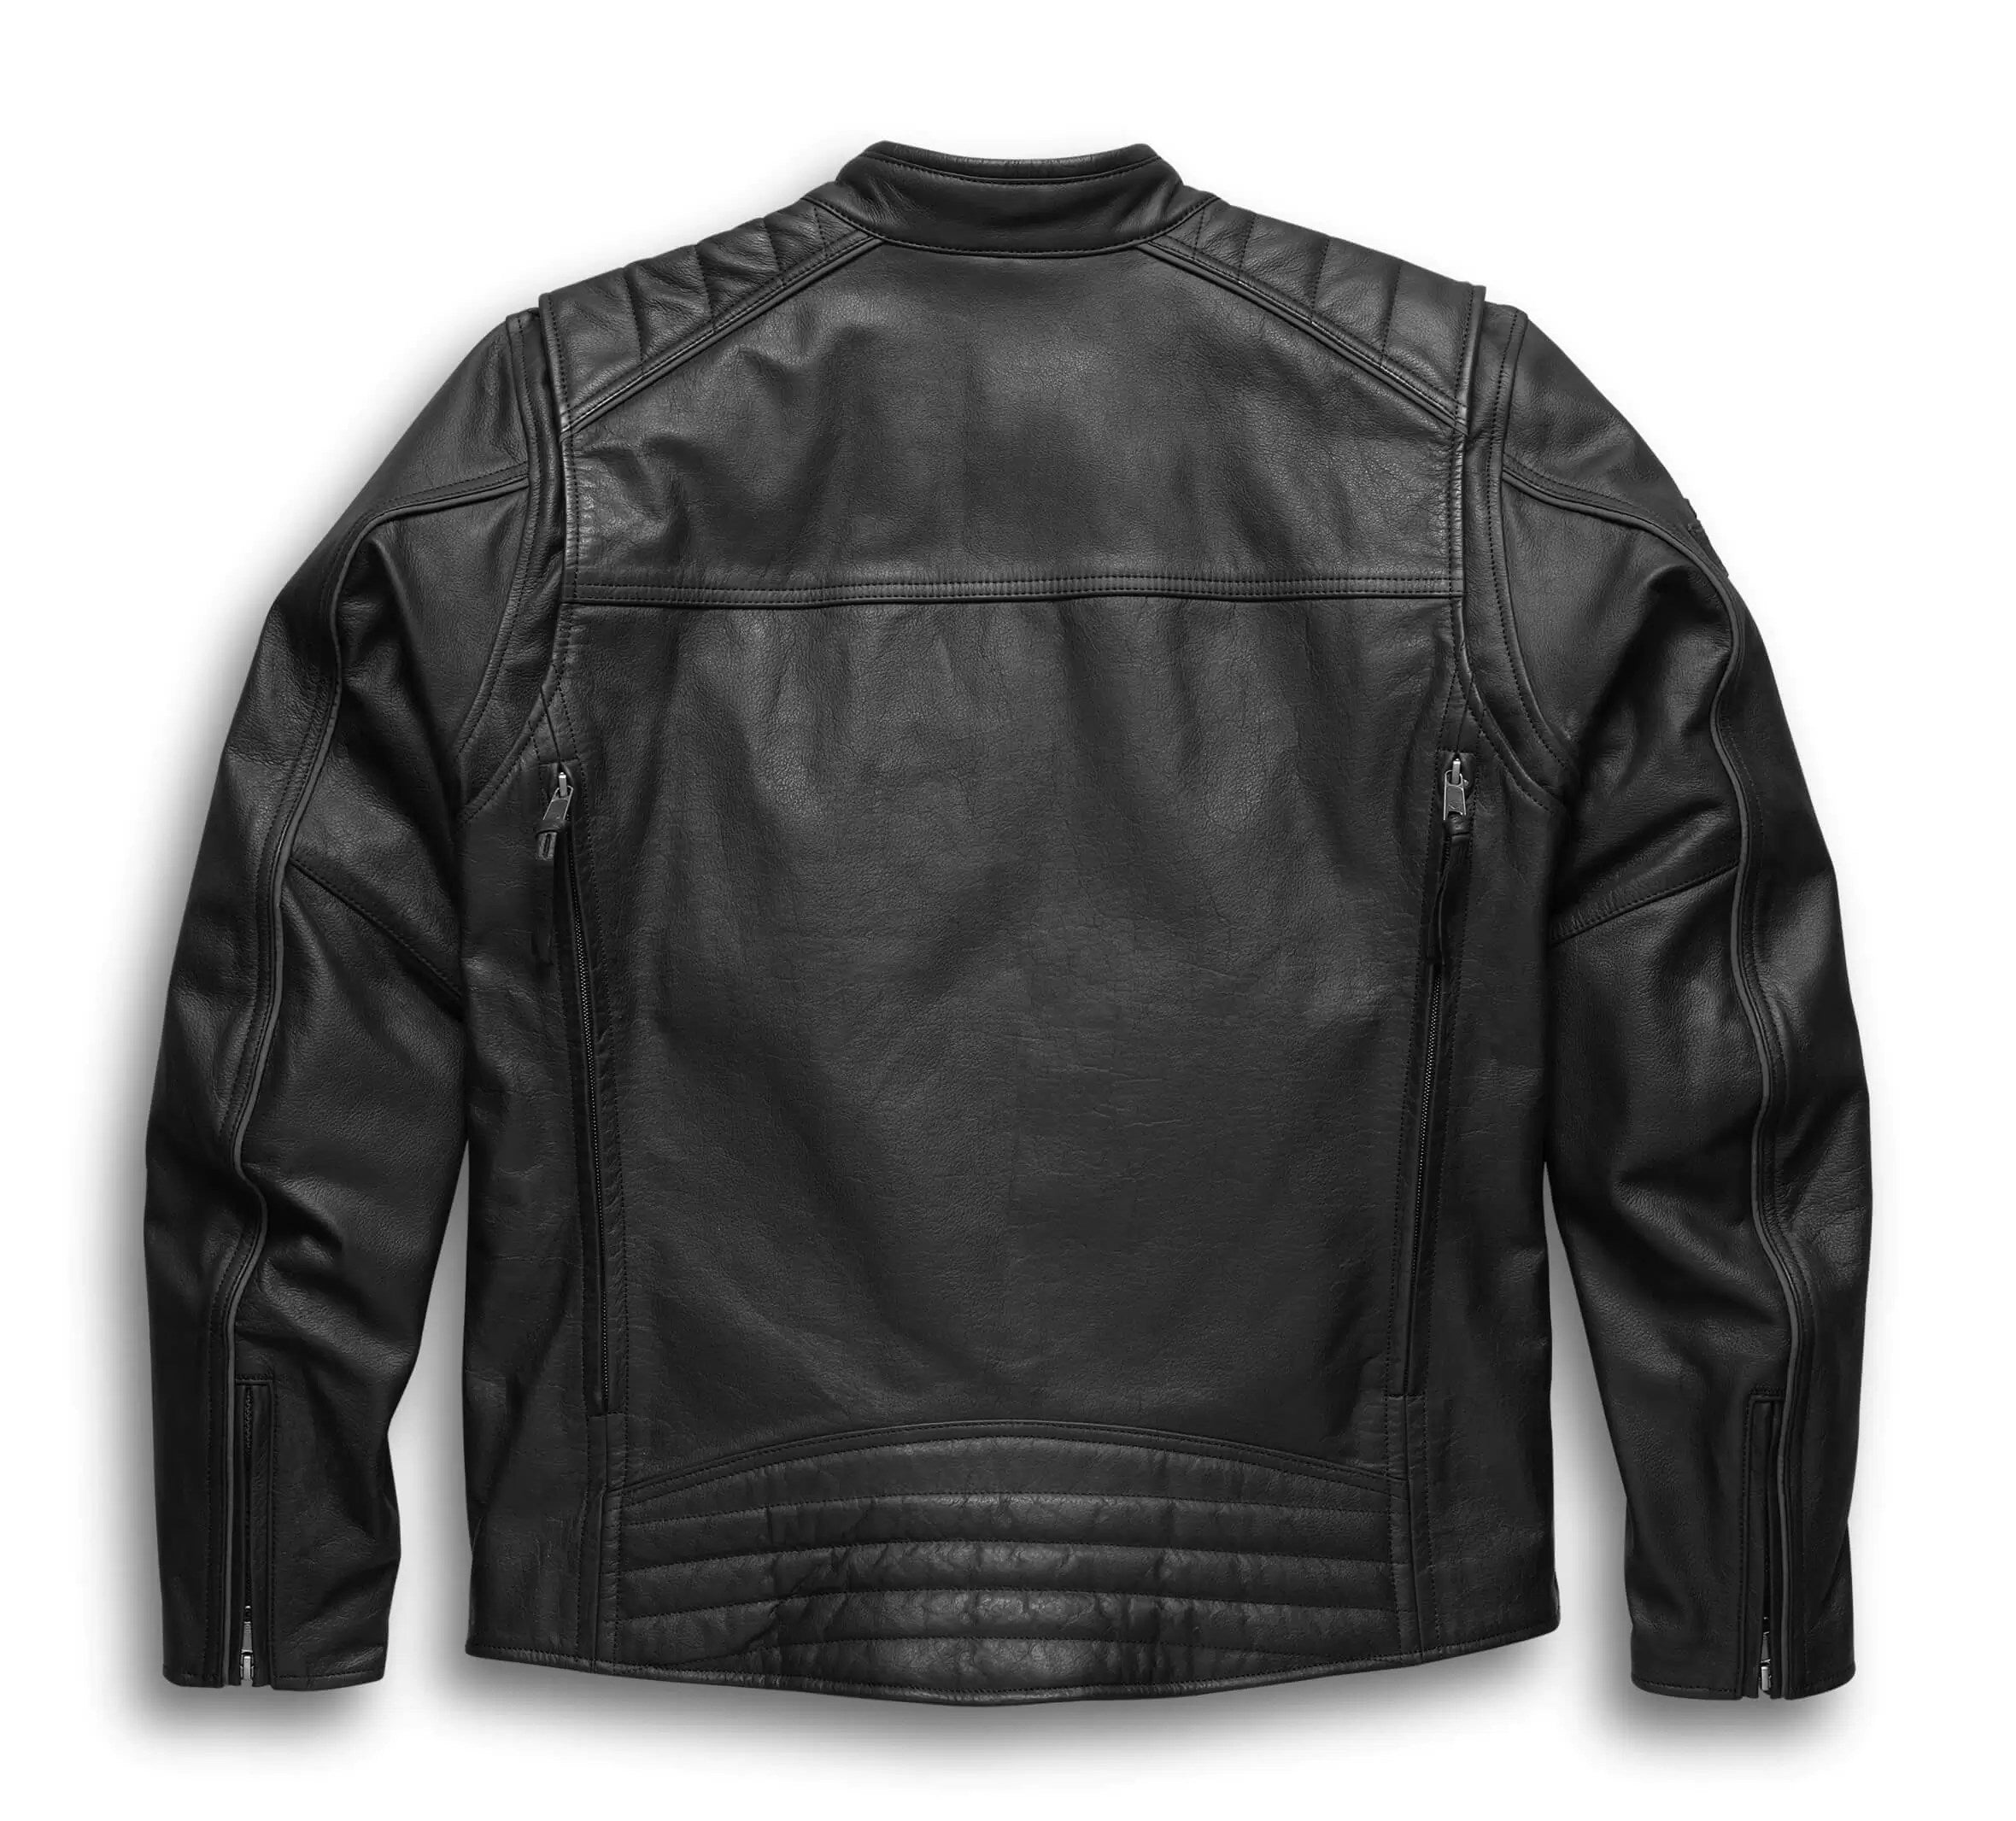 Harley Davidson Motorcycle Leather Jacket in Black